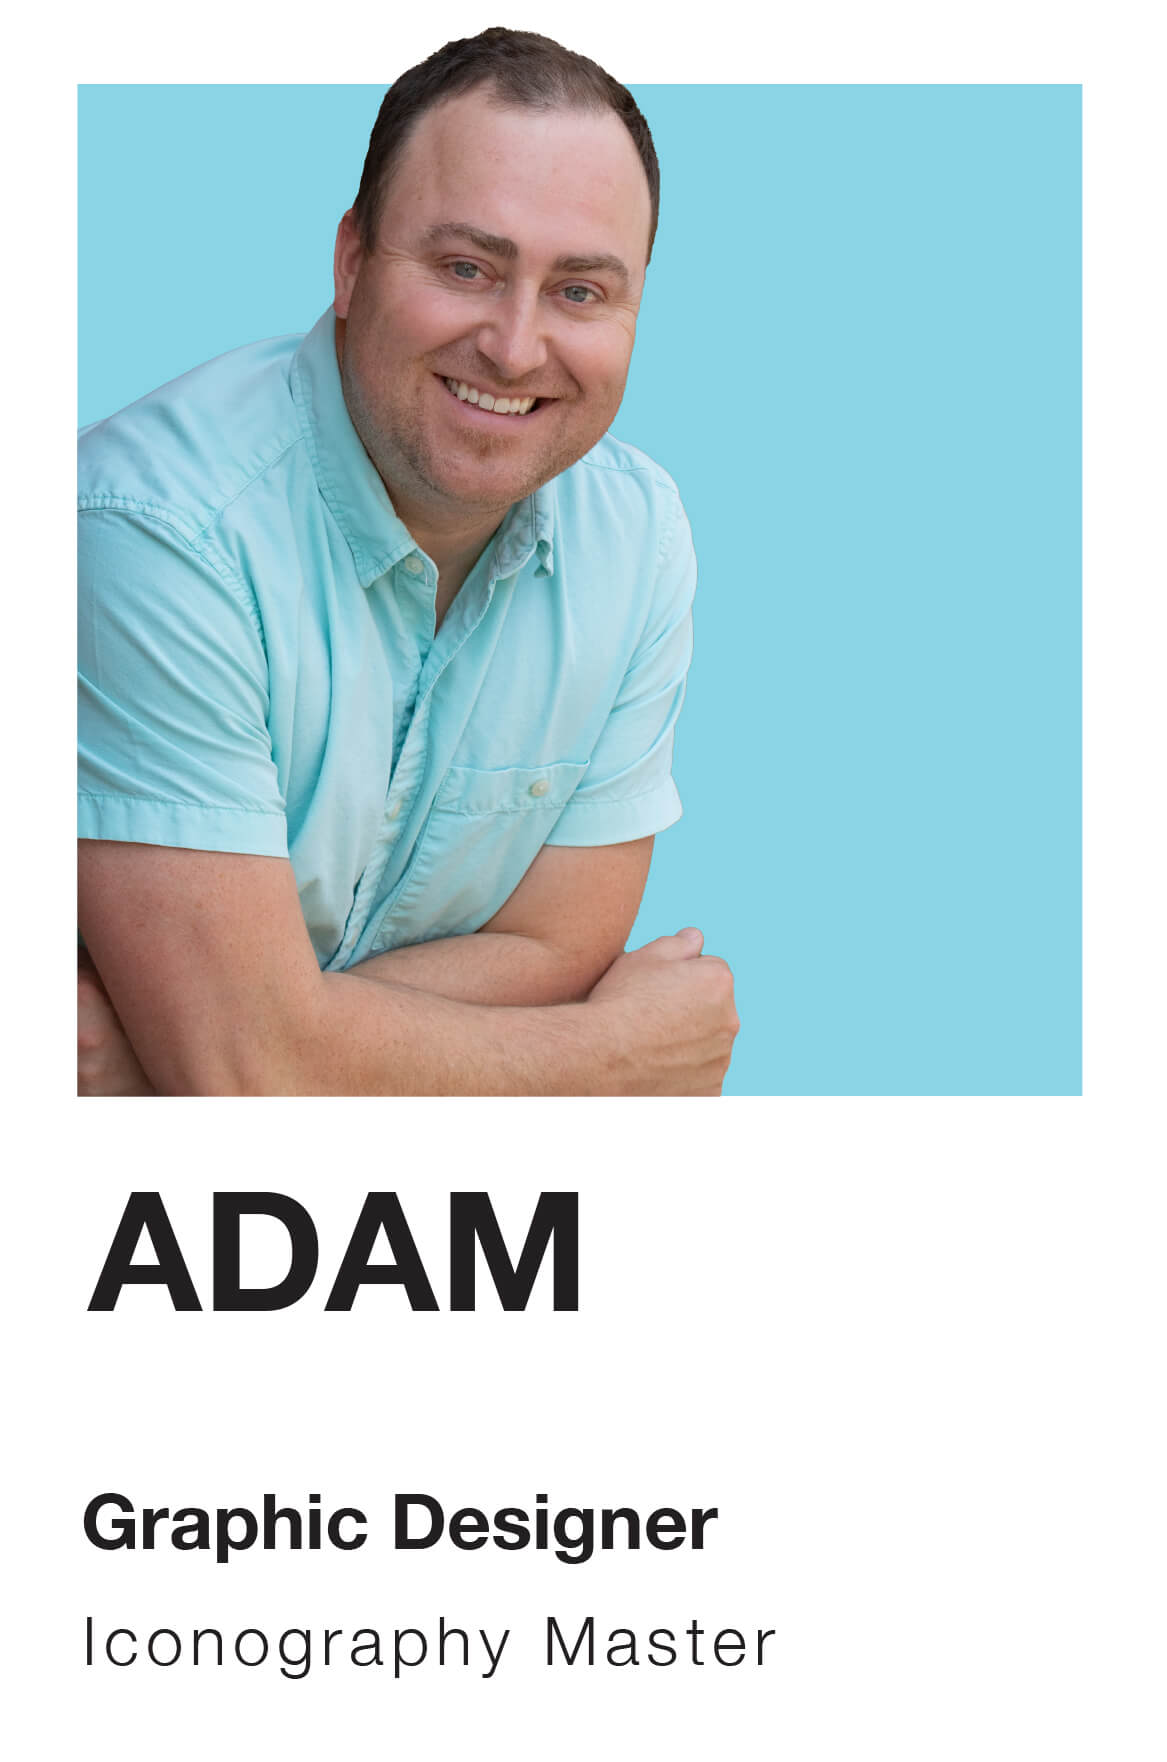 Adam McKinlay portrait photo featured in a Pantone swatch